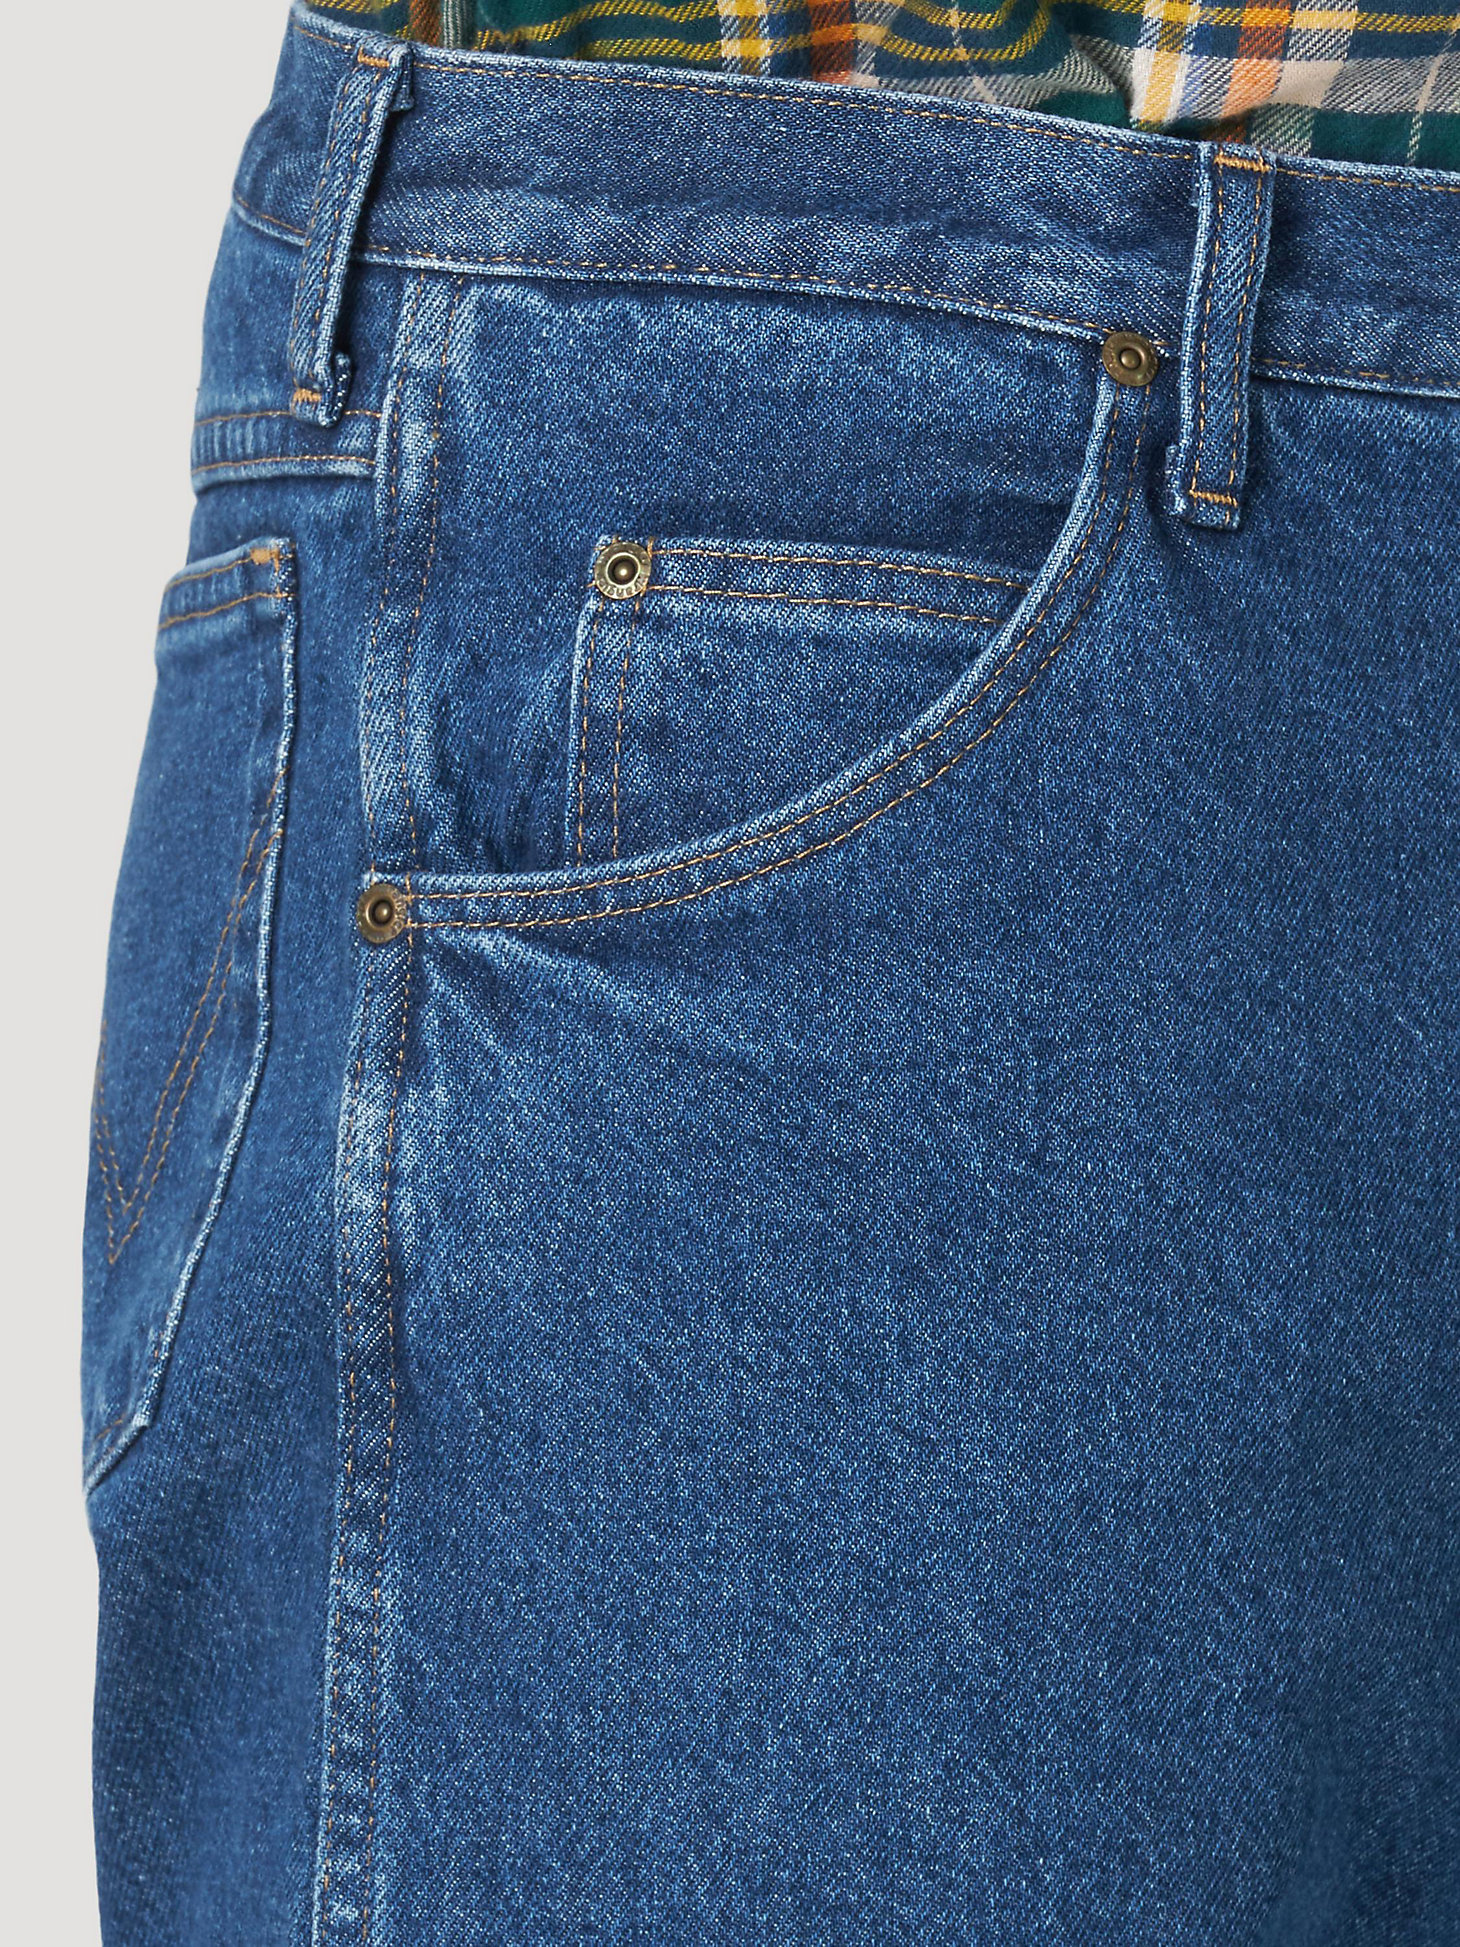 Wrangler Rugged Wear® Fleece Lined Relaxed Fit Jean in Stonewash alternative view 5